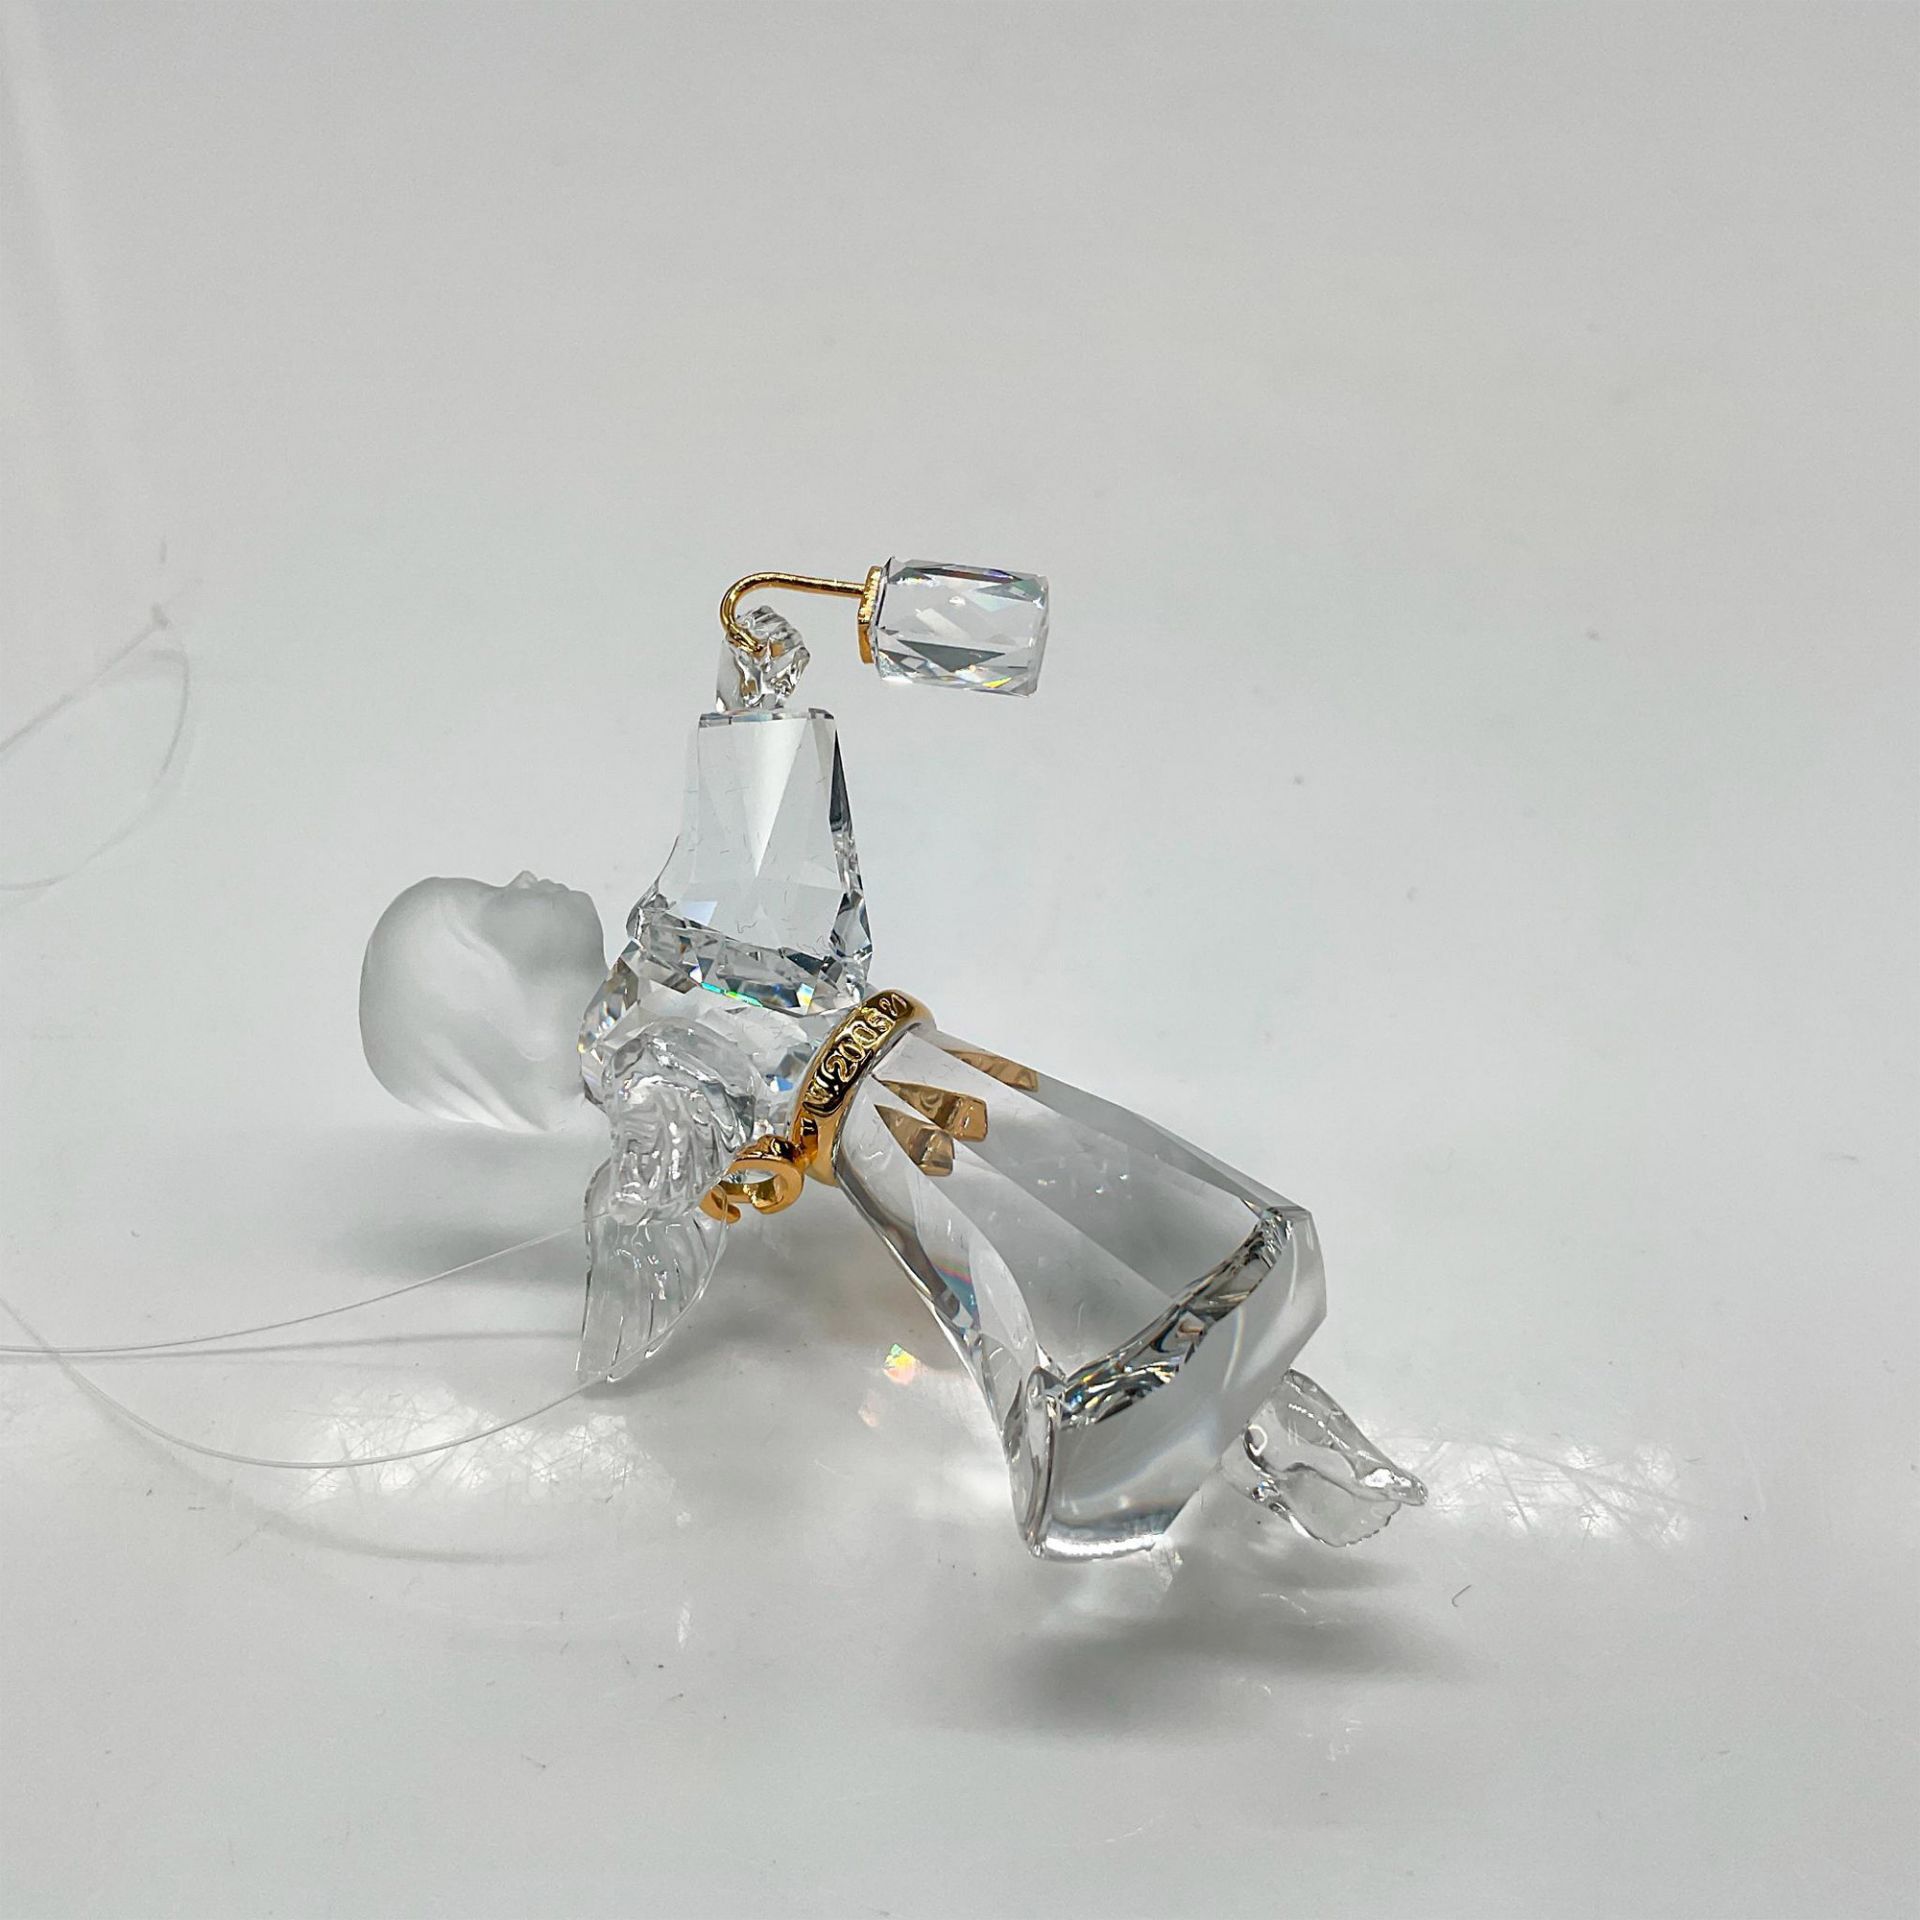 Swarovski Crystal Ornament, Angel Holding Lantern - Image 3 of 4